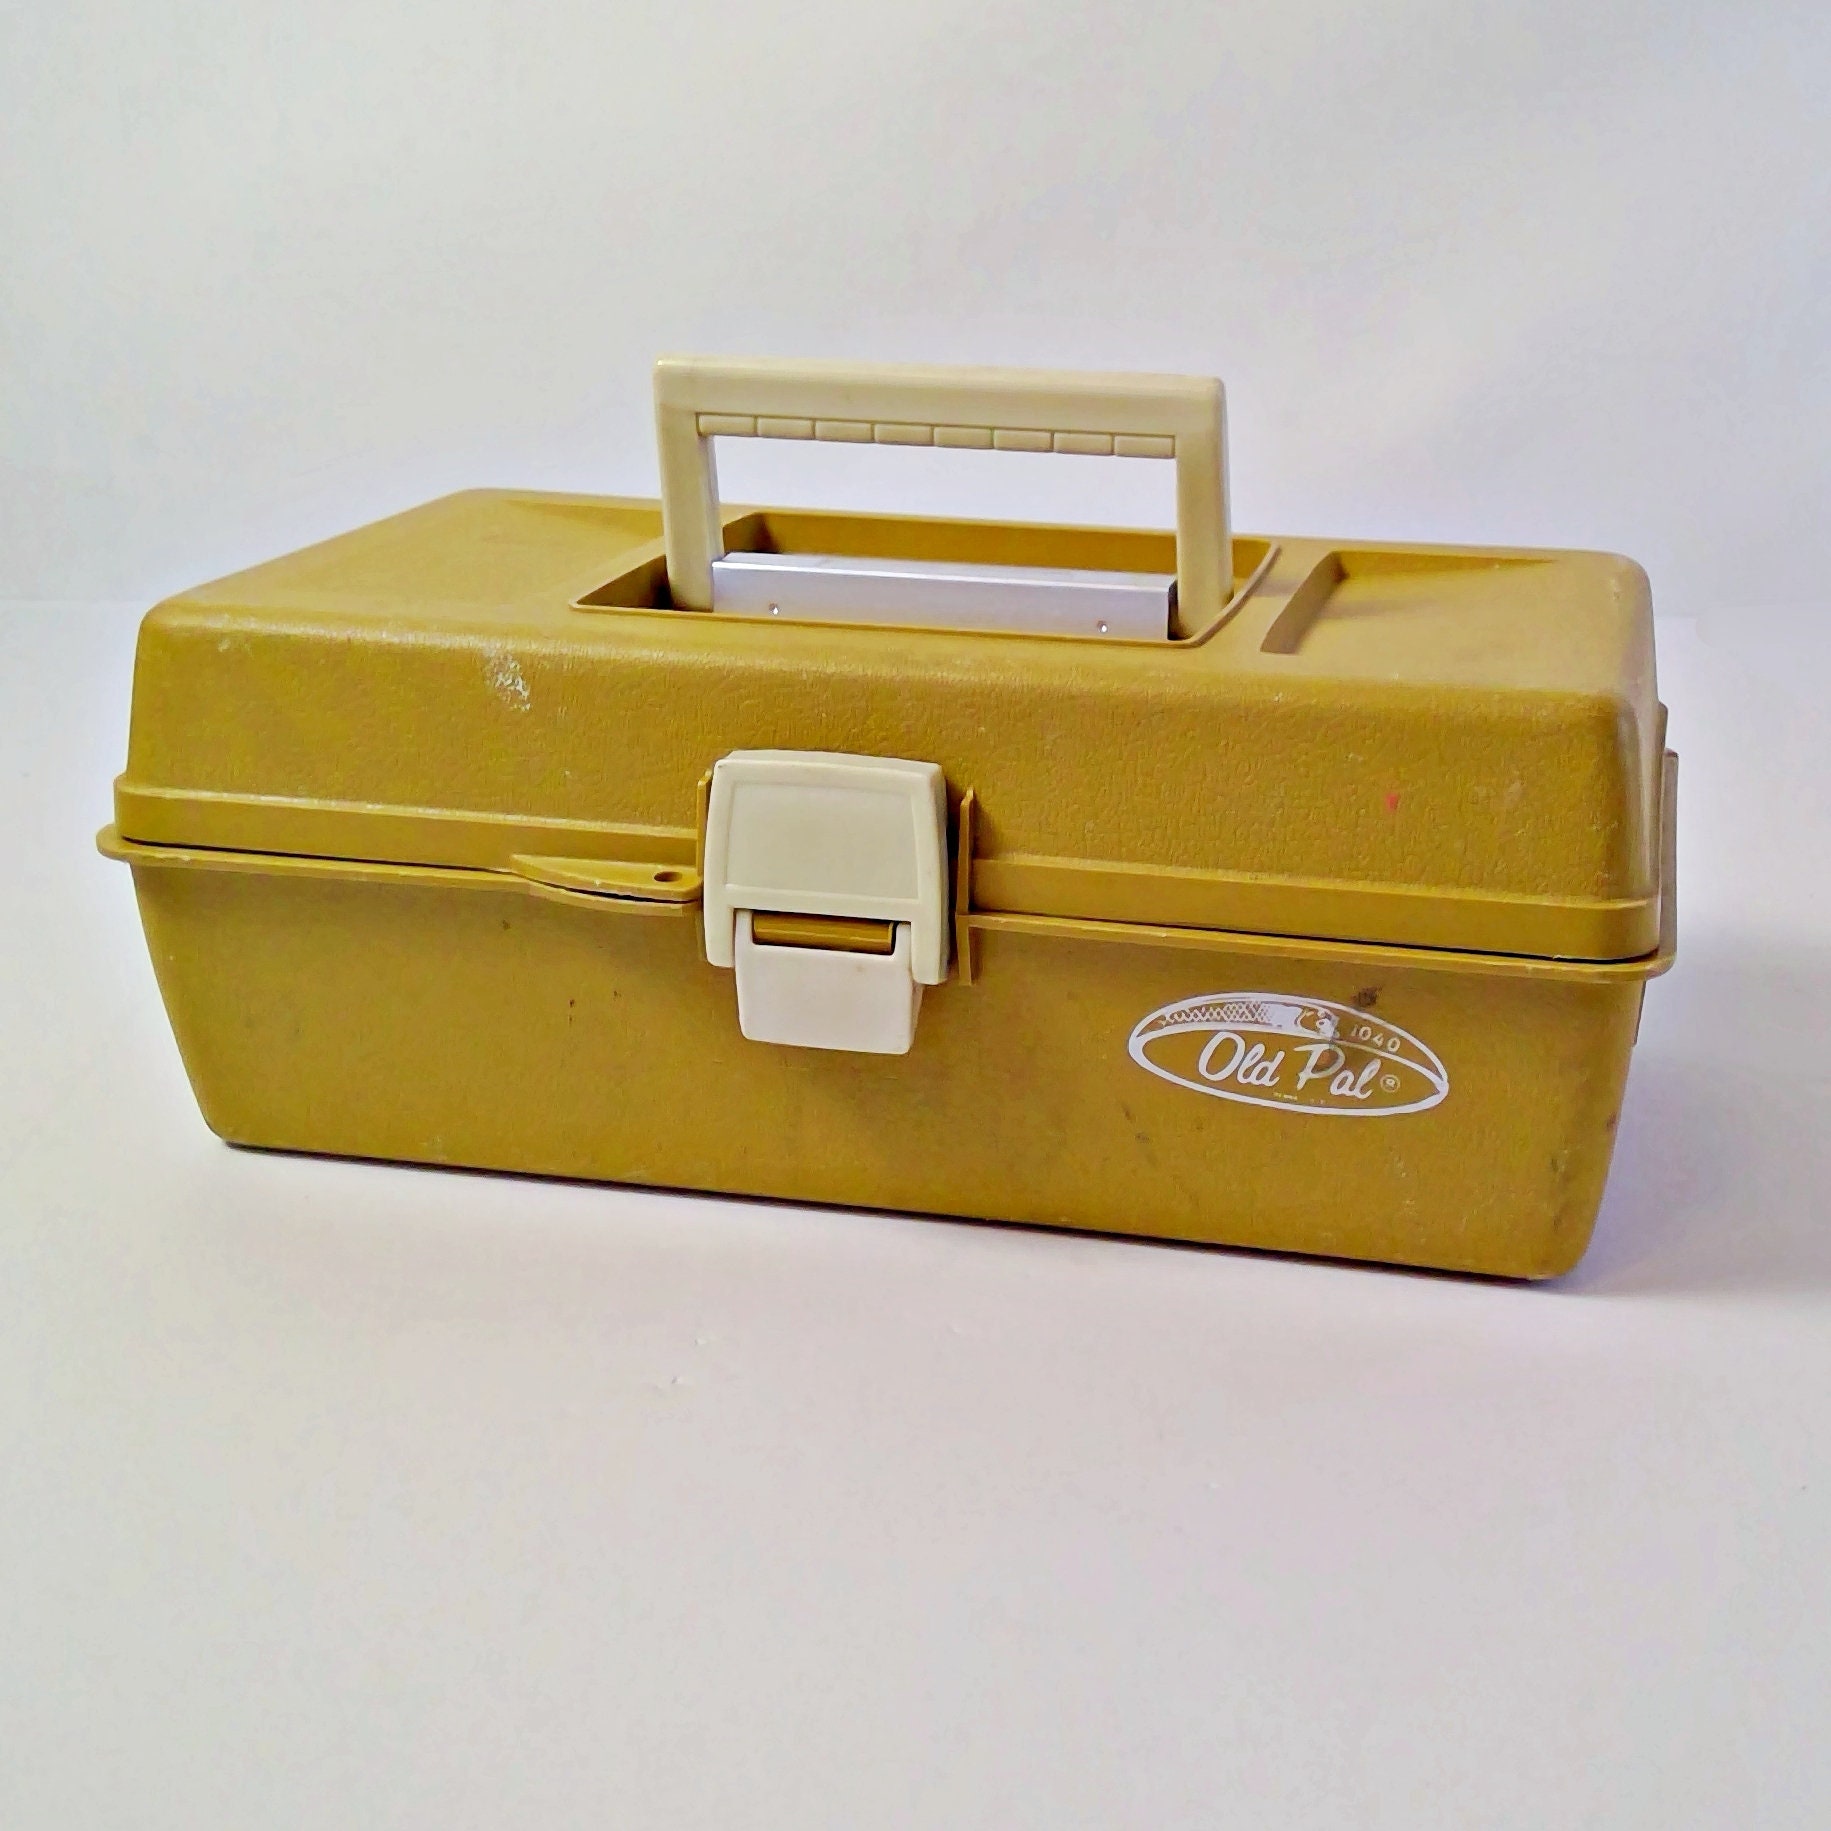 Flambeau Classic Tackle Boxes - The Bait Shop Gold Coast